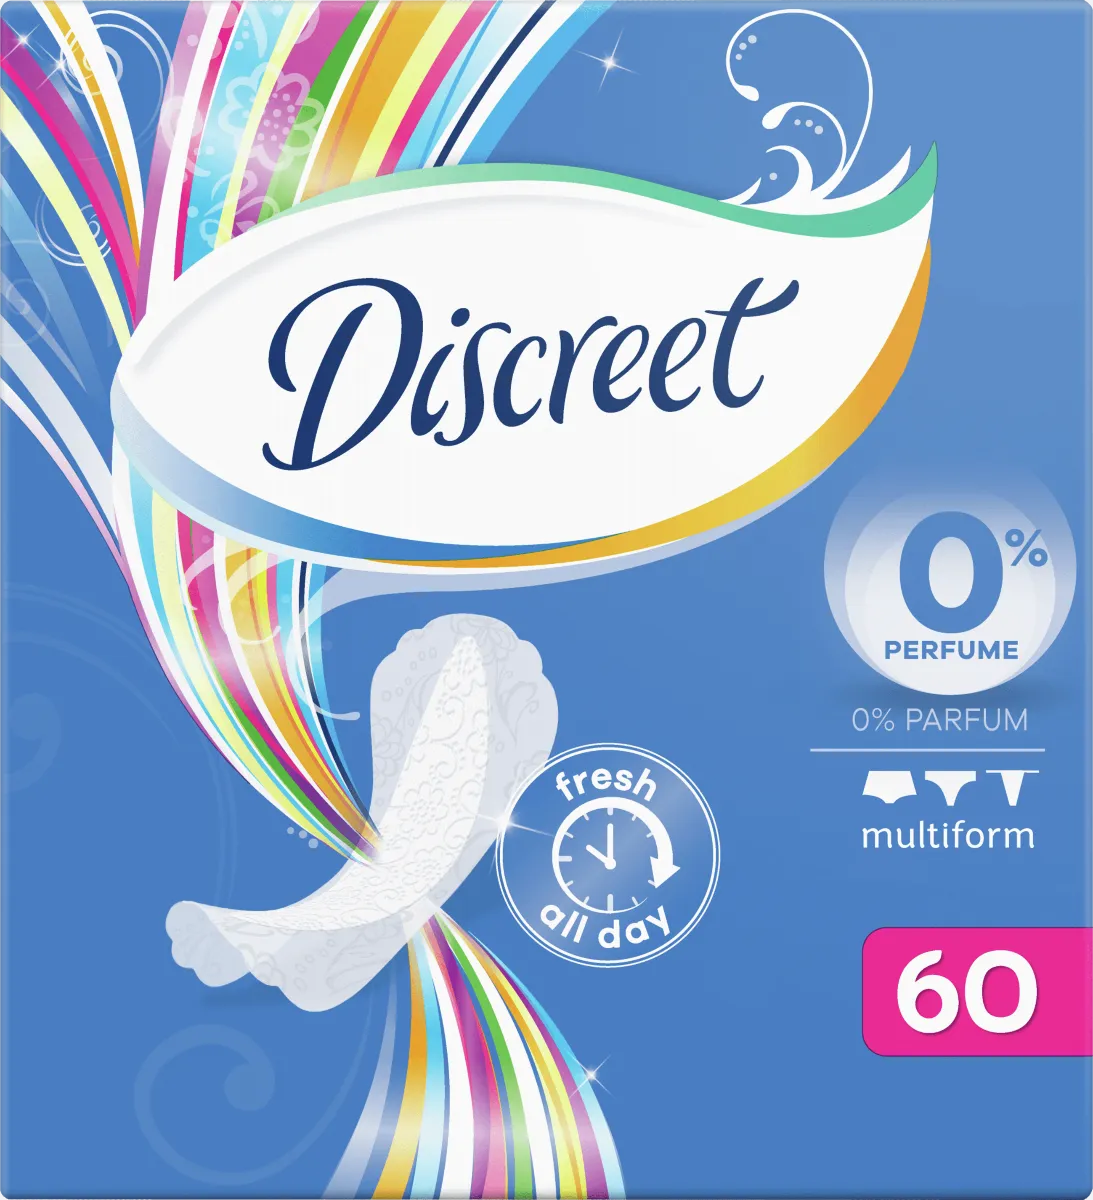 Discreet Multiform 0% Air, wkładki higieniczne, 60 sztuk